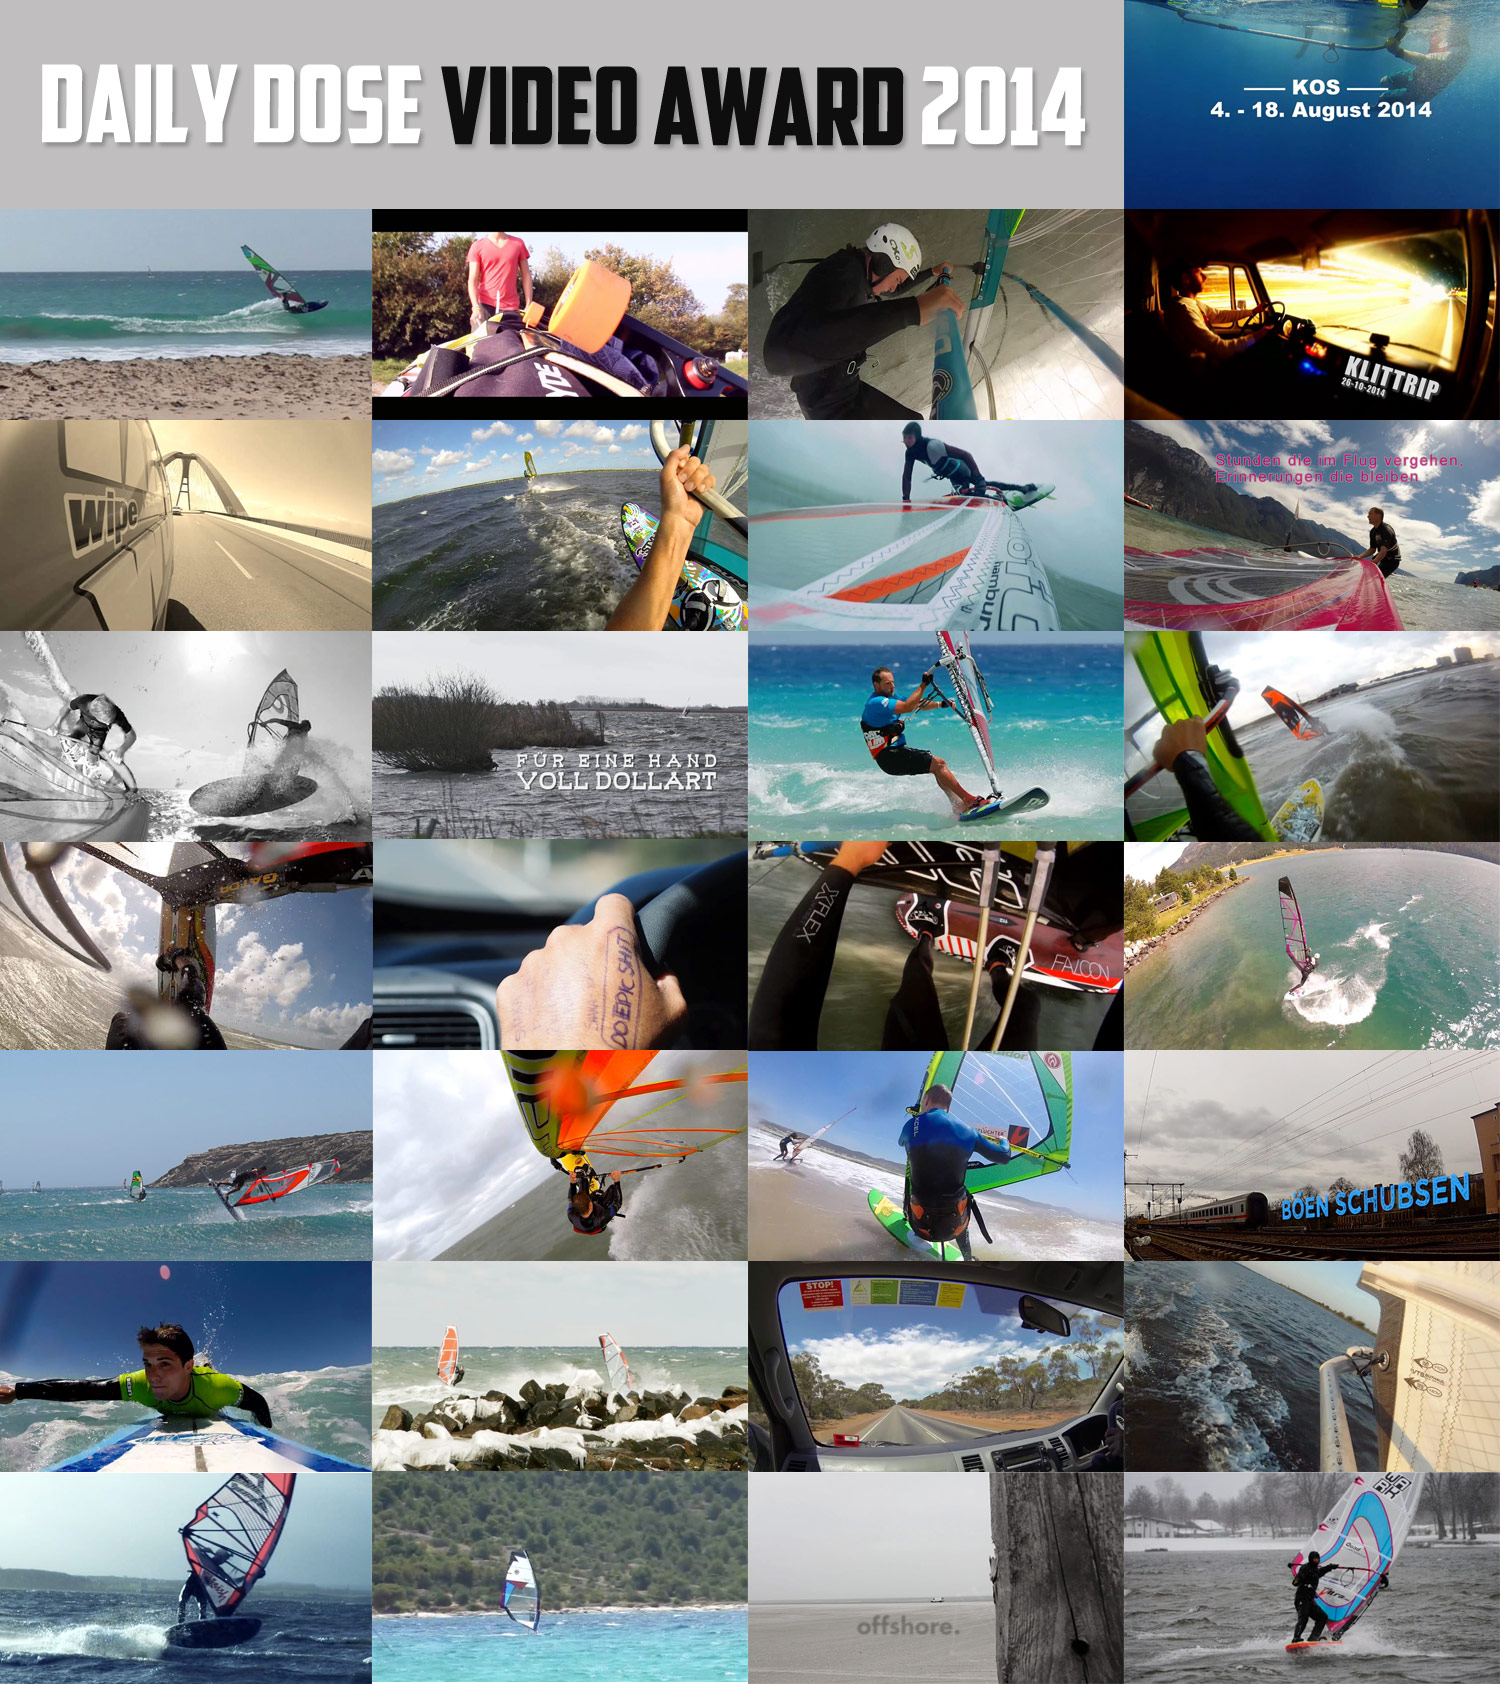 DAILY DOSE Video Award 2014